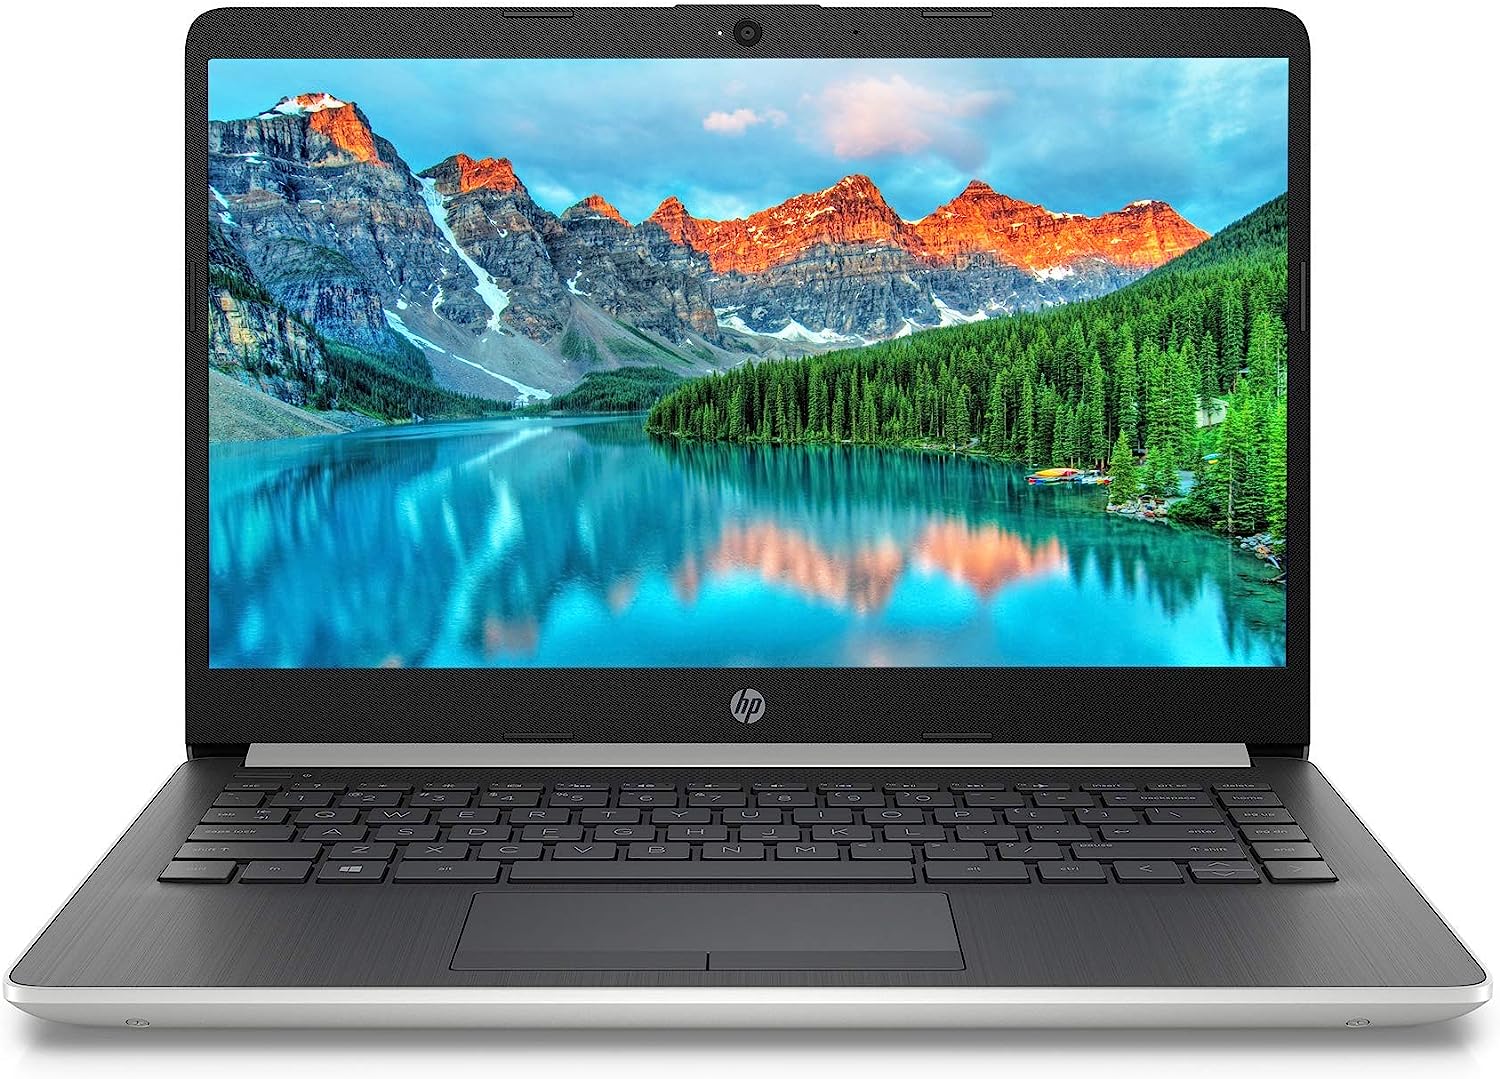 HP 14in High Performance Laptop (AMD Ryzen 3 3200U [...]